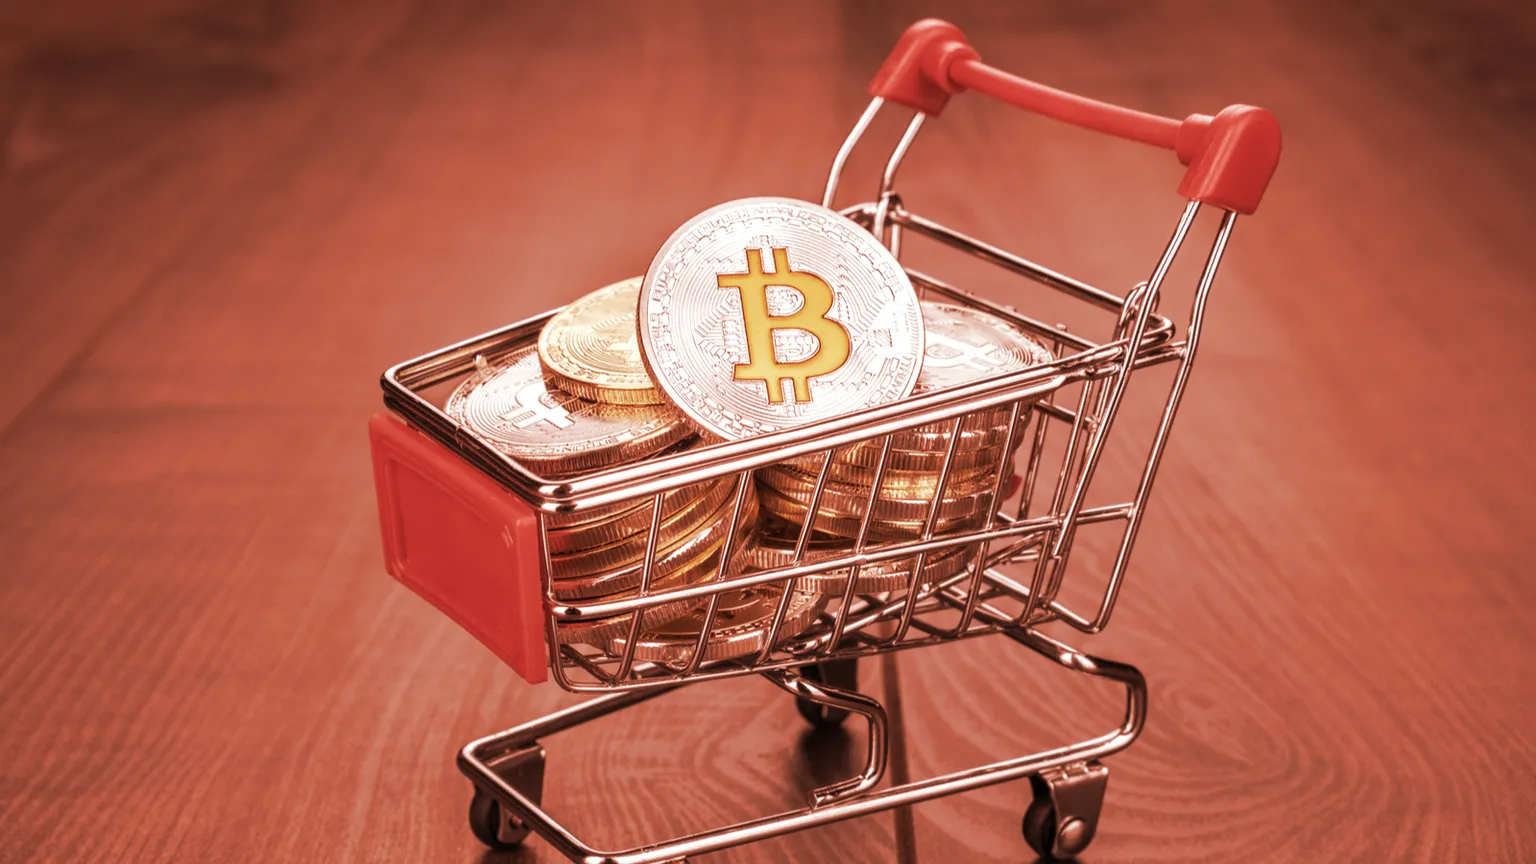 Shopping for Bitcoin. Image: Shutterstock